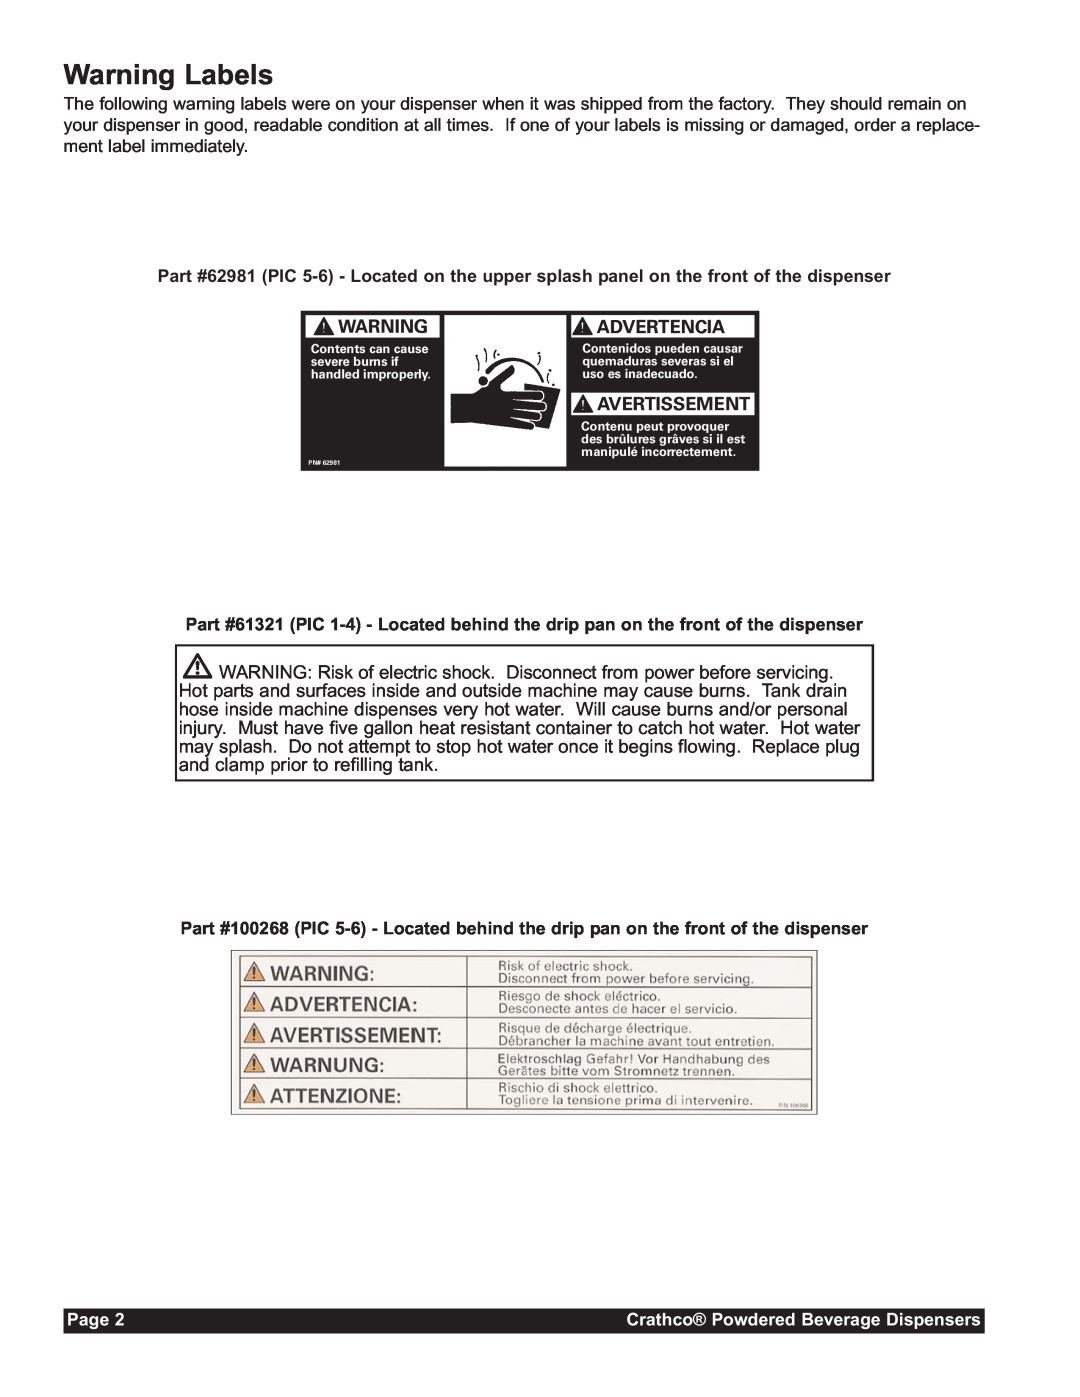 Grindmaster CC-302-20 service manual Warning Labels, Advertencia, Avertissement 